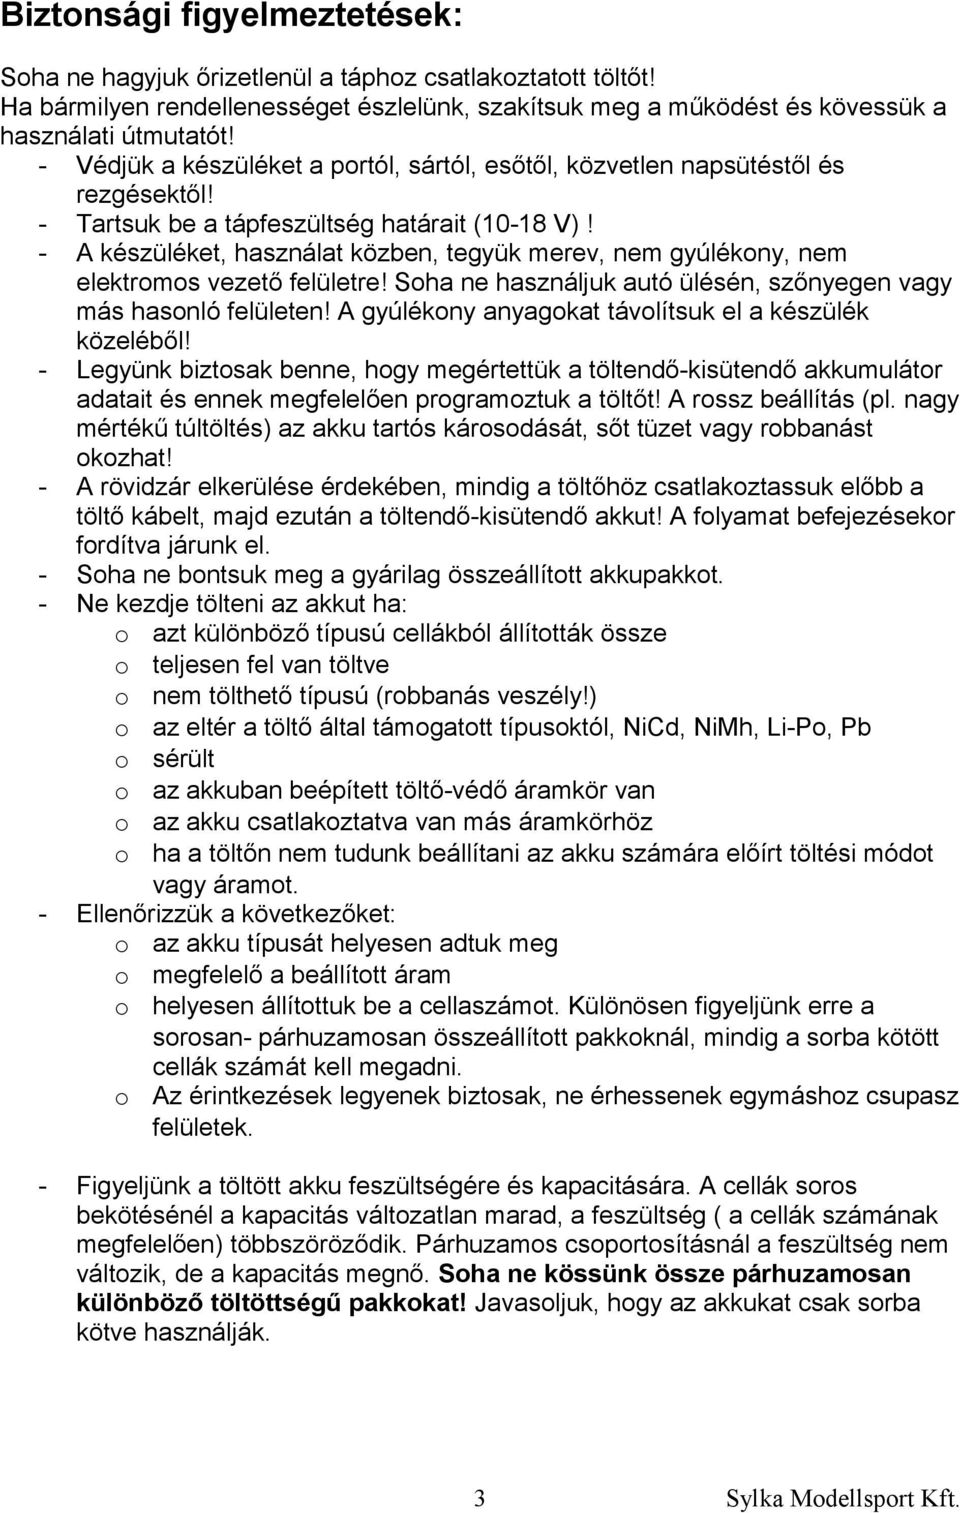 Sylka Modellsport Kft. - PDF Free Download